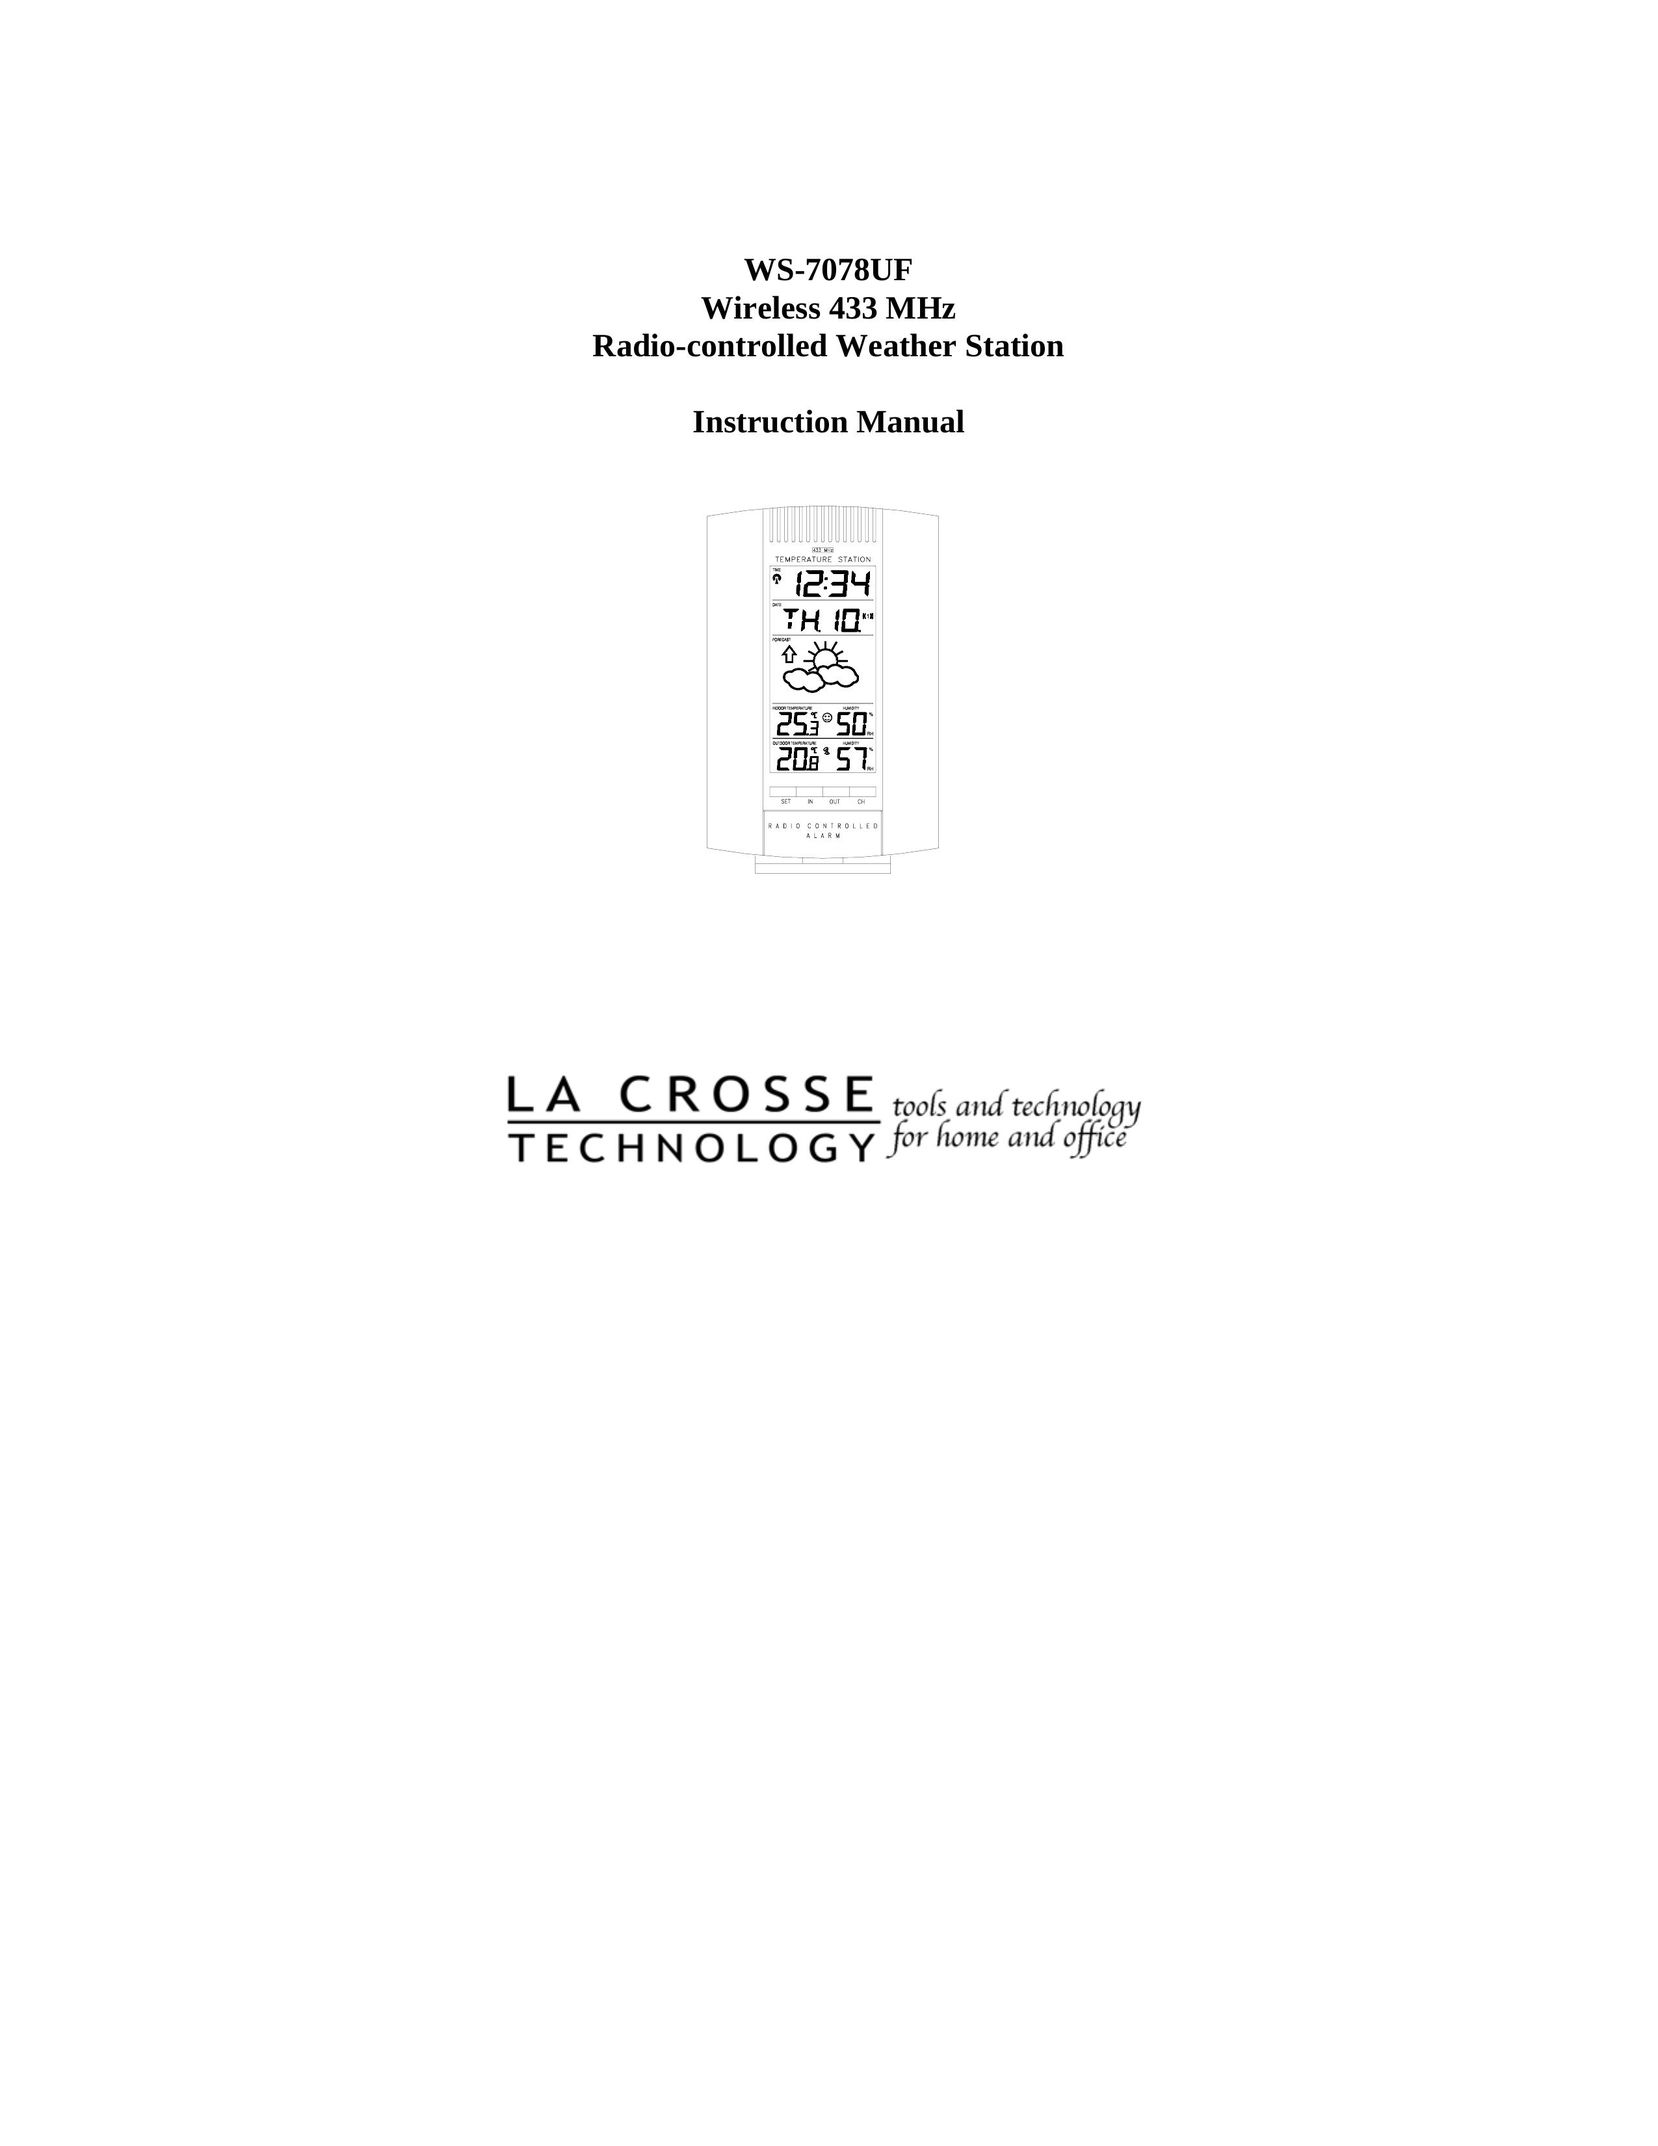 La Crosse Technology WS-7078TWC Portable Radio User Manual